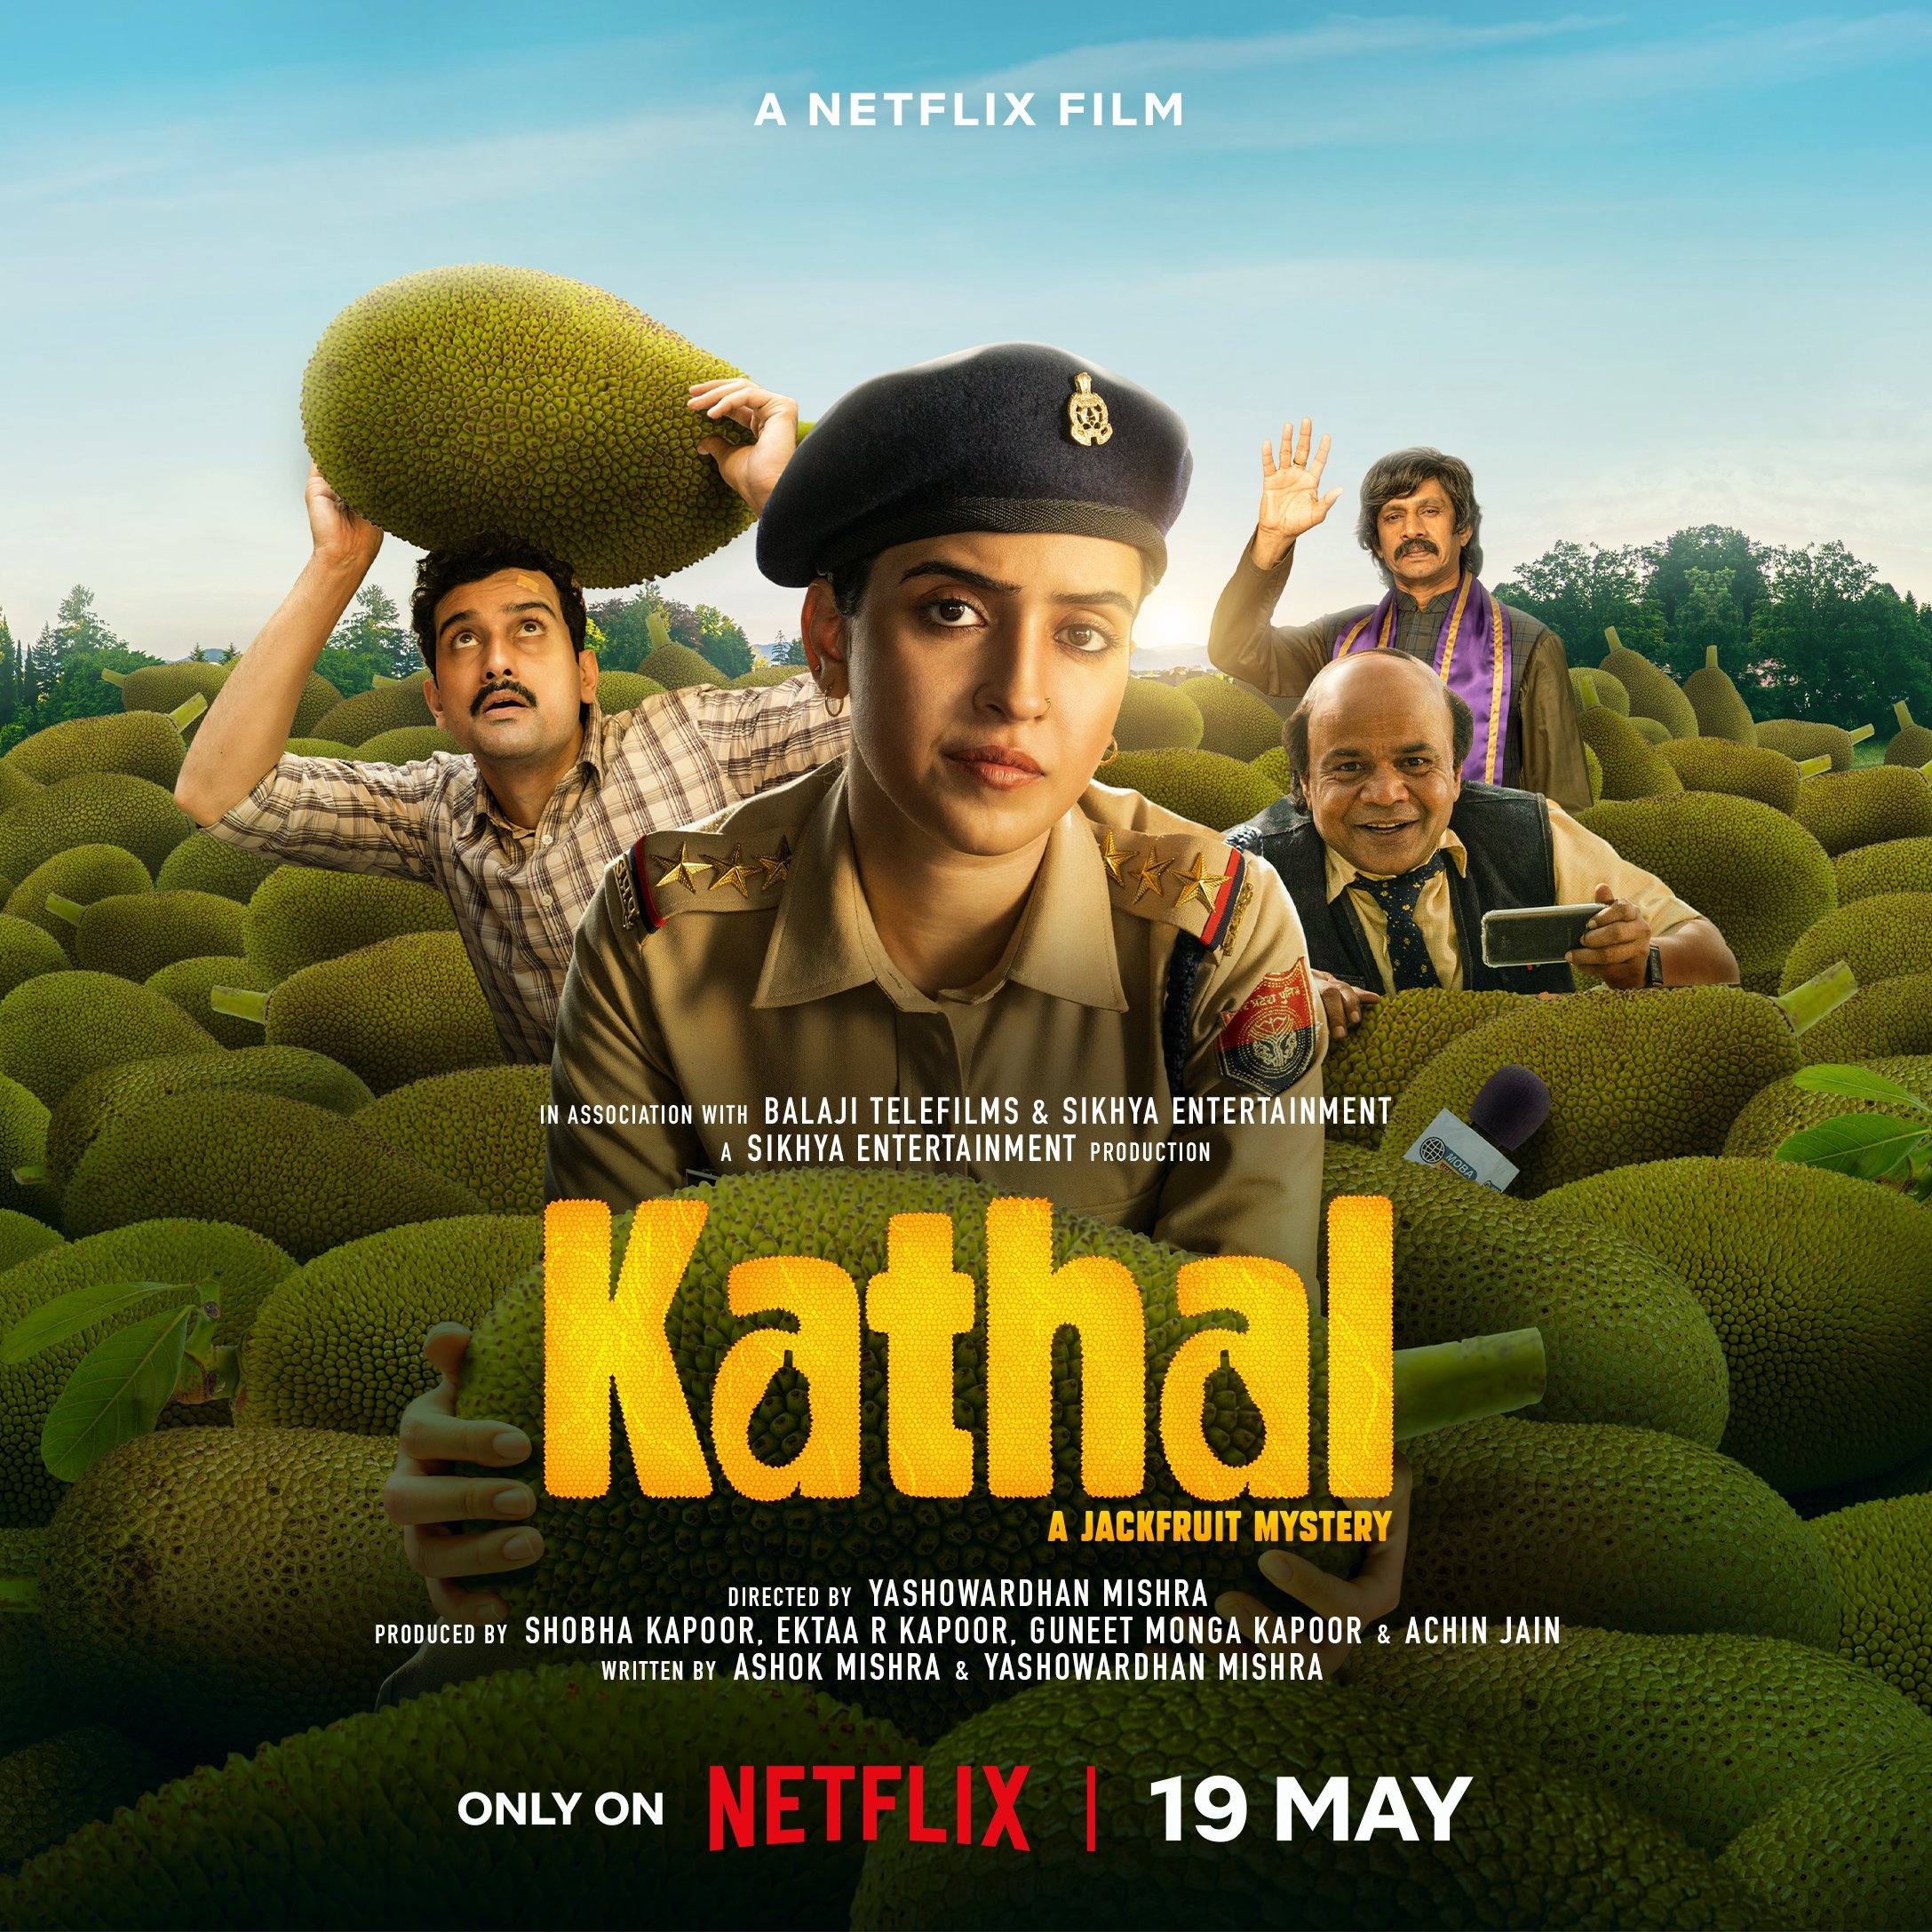 Kathal Poster